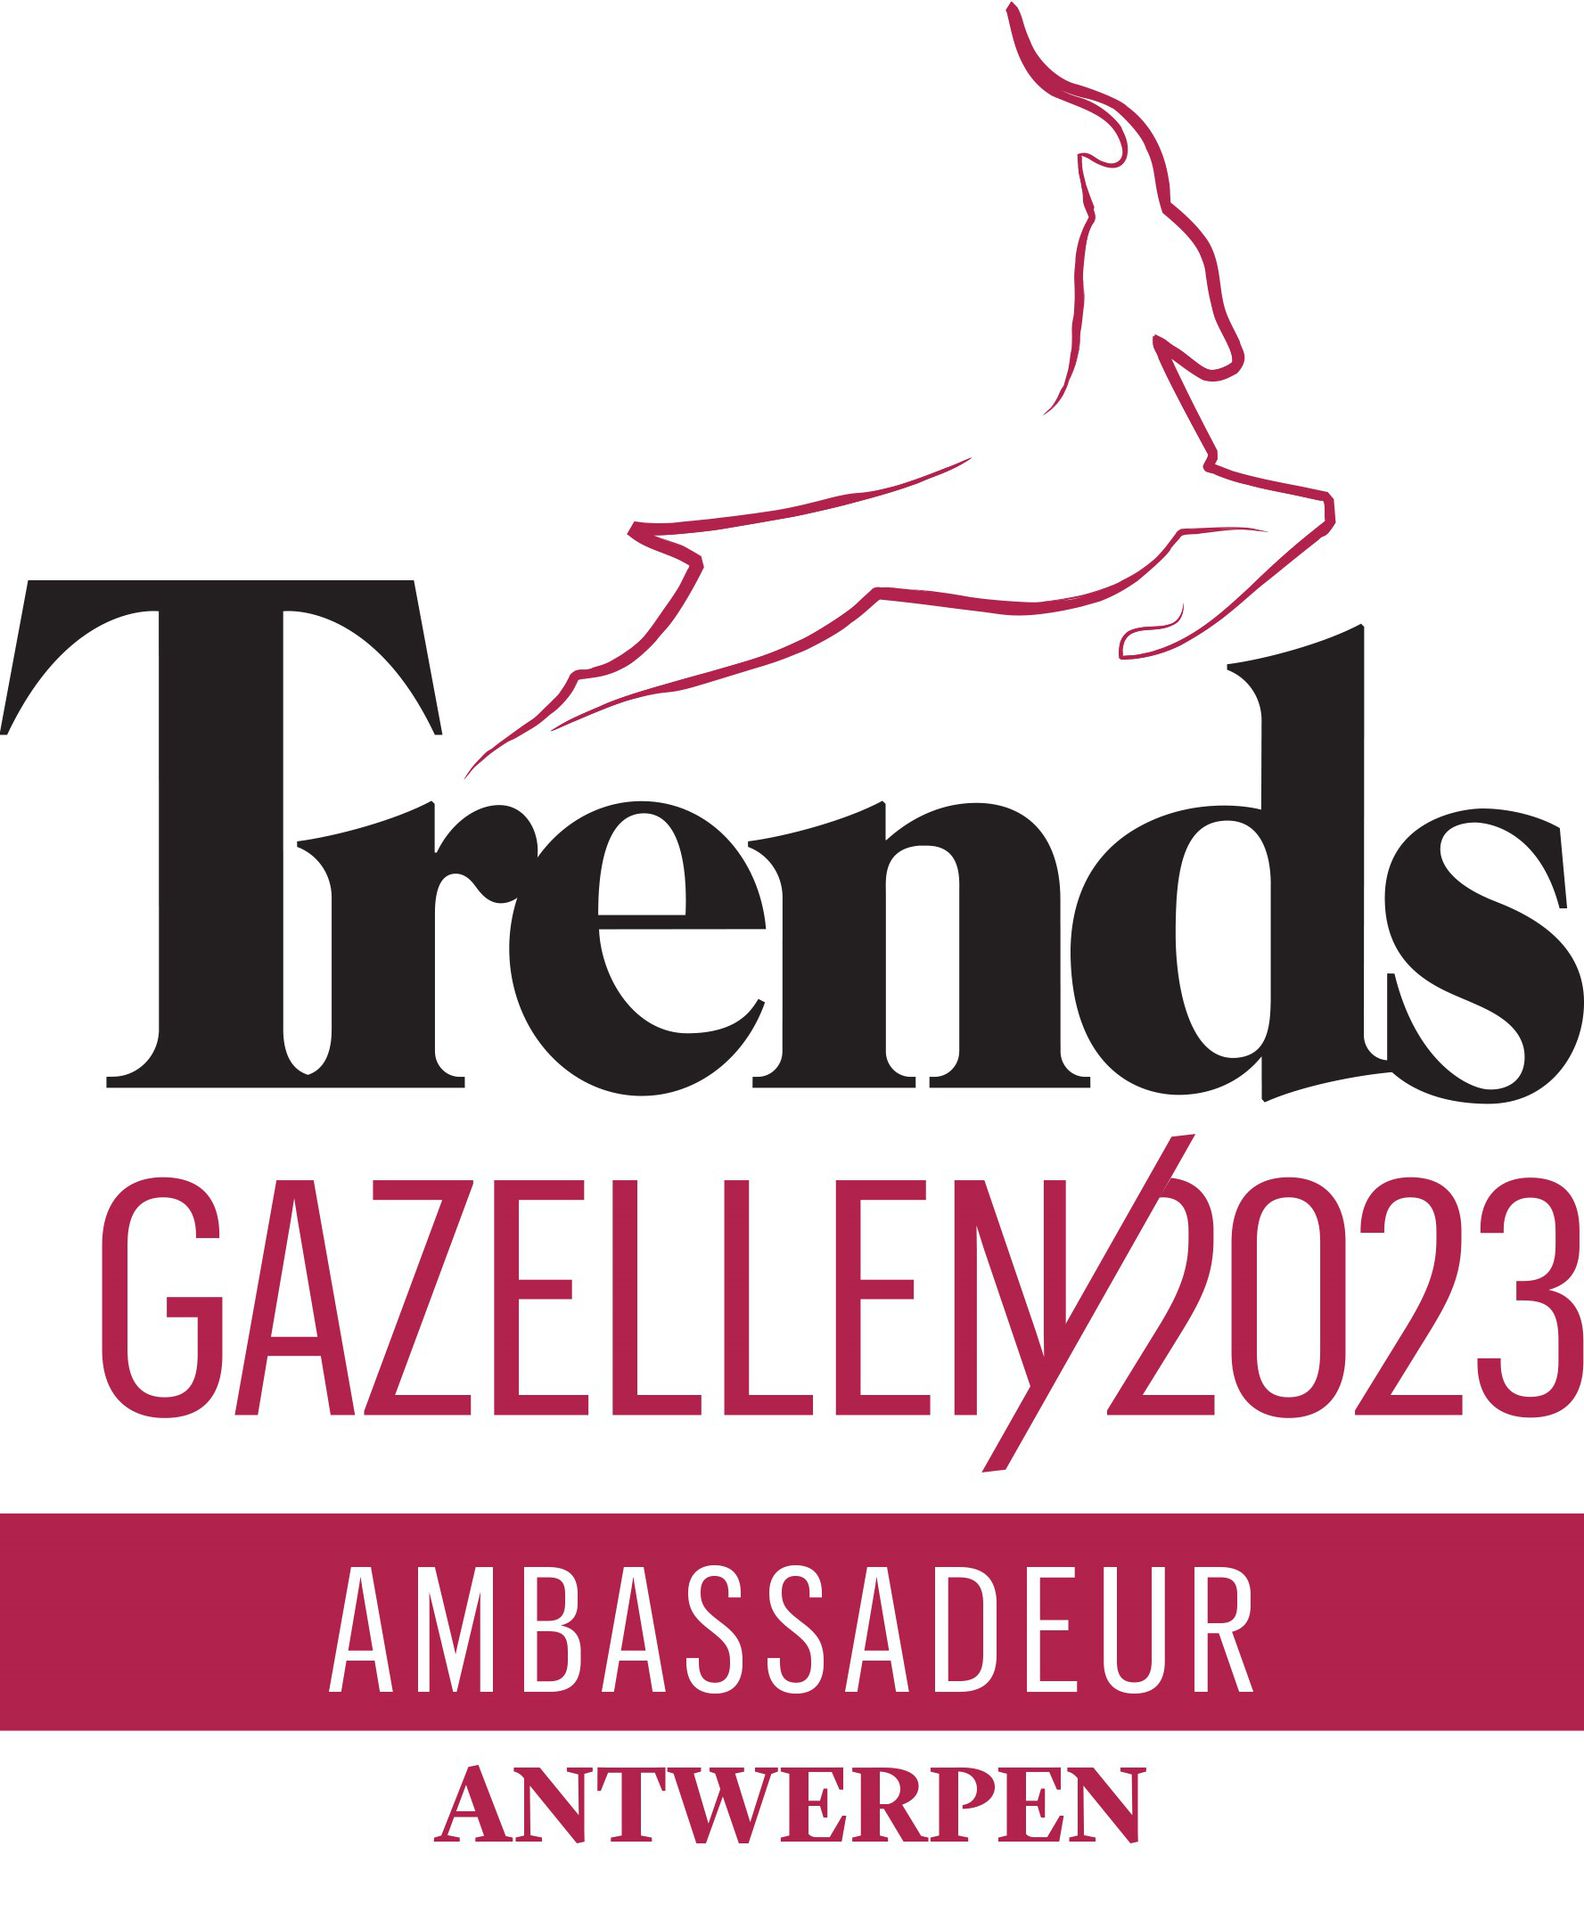 Trends gazellen ambassadeur 2023